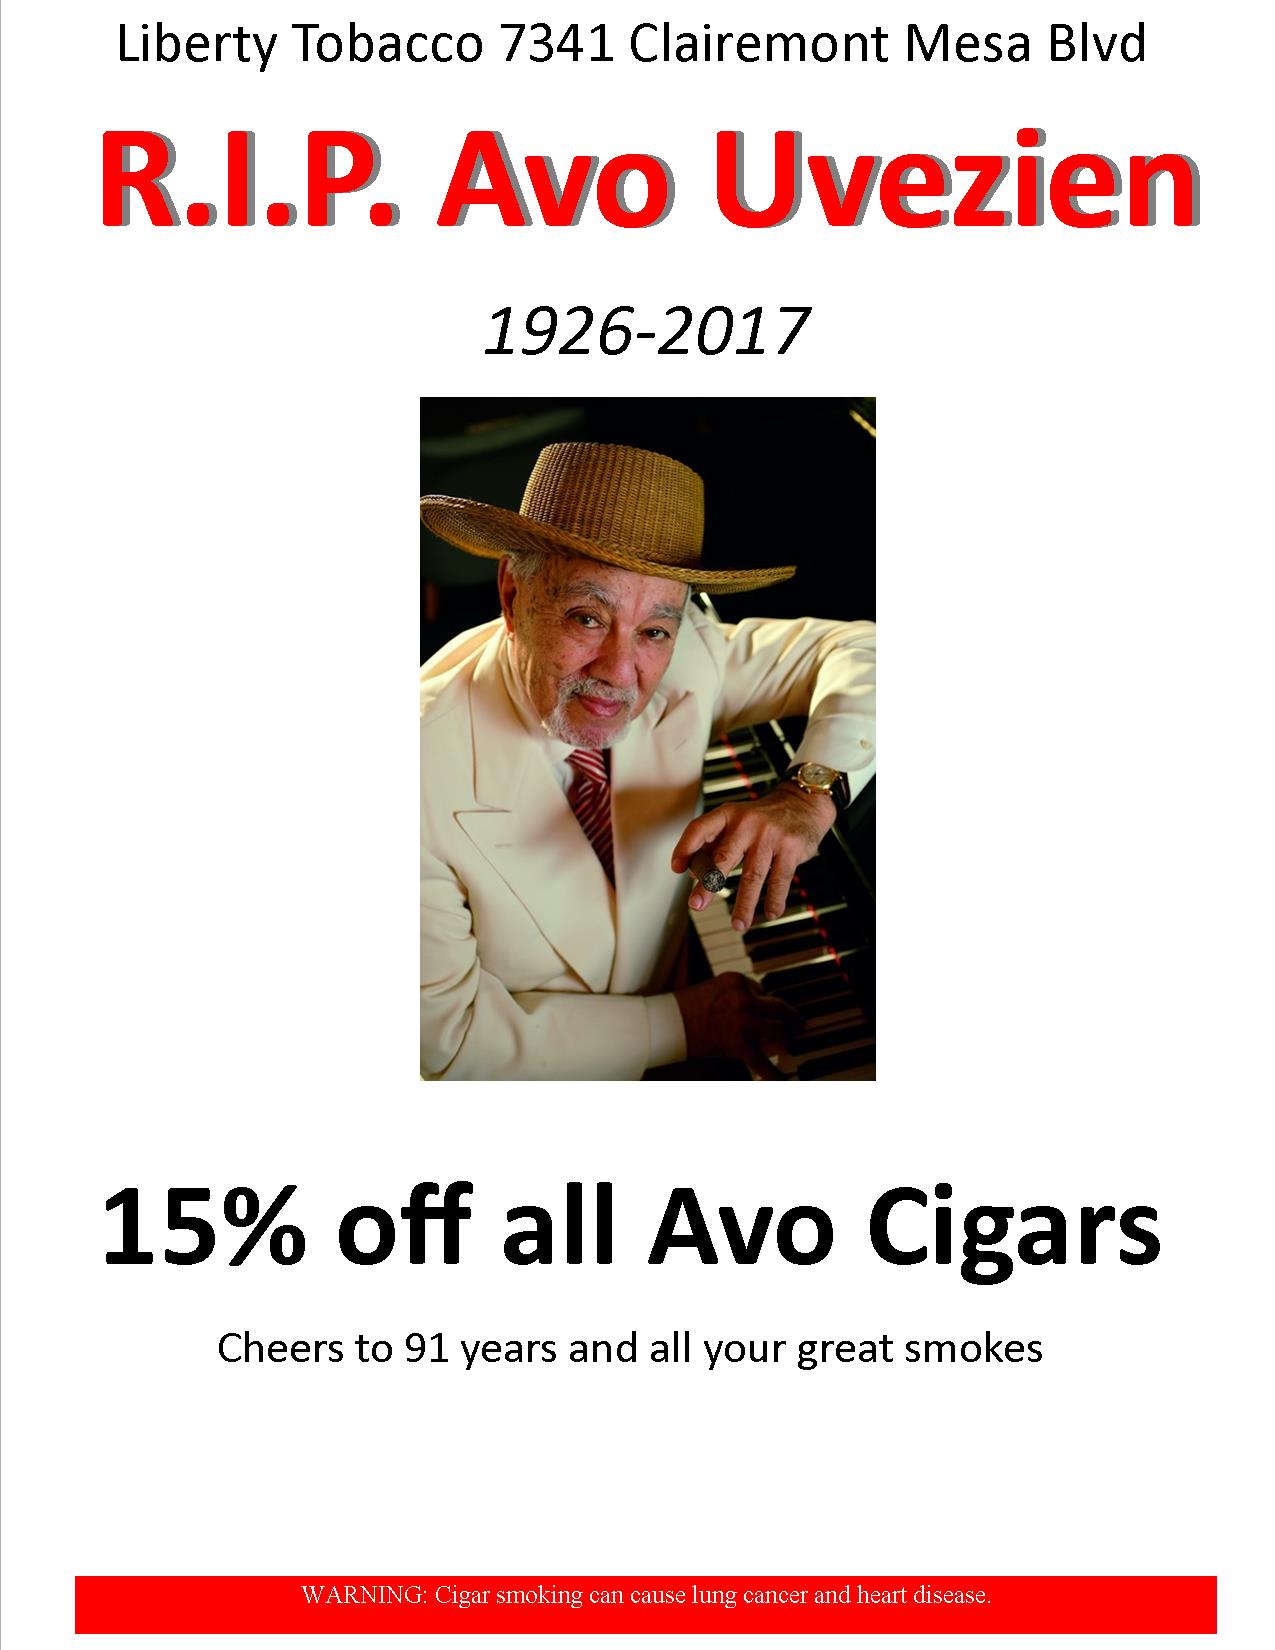 Rest In Peace Avo Uvezian